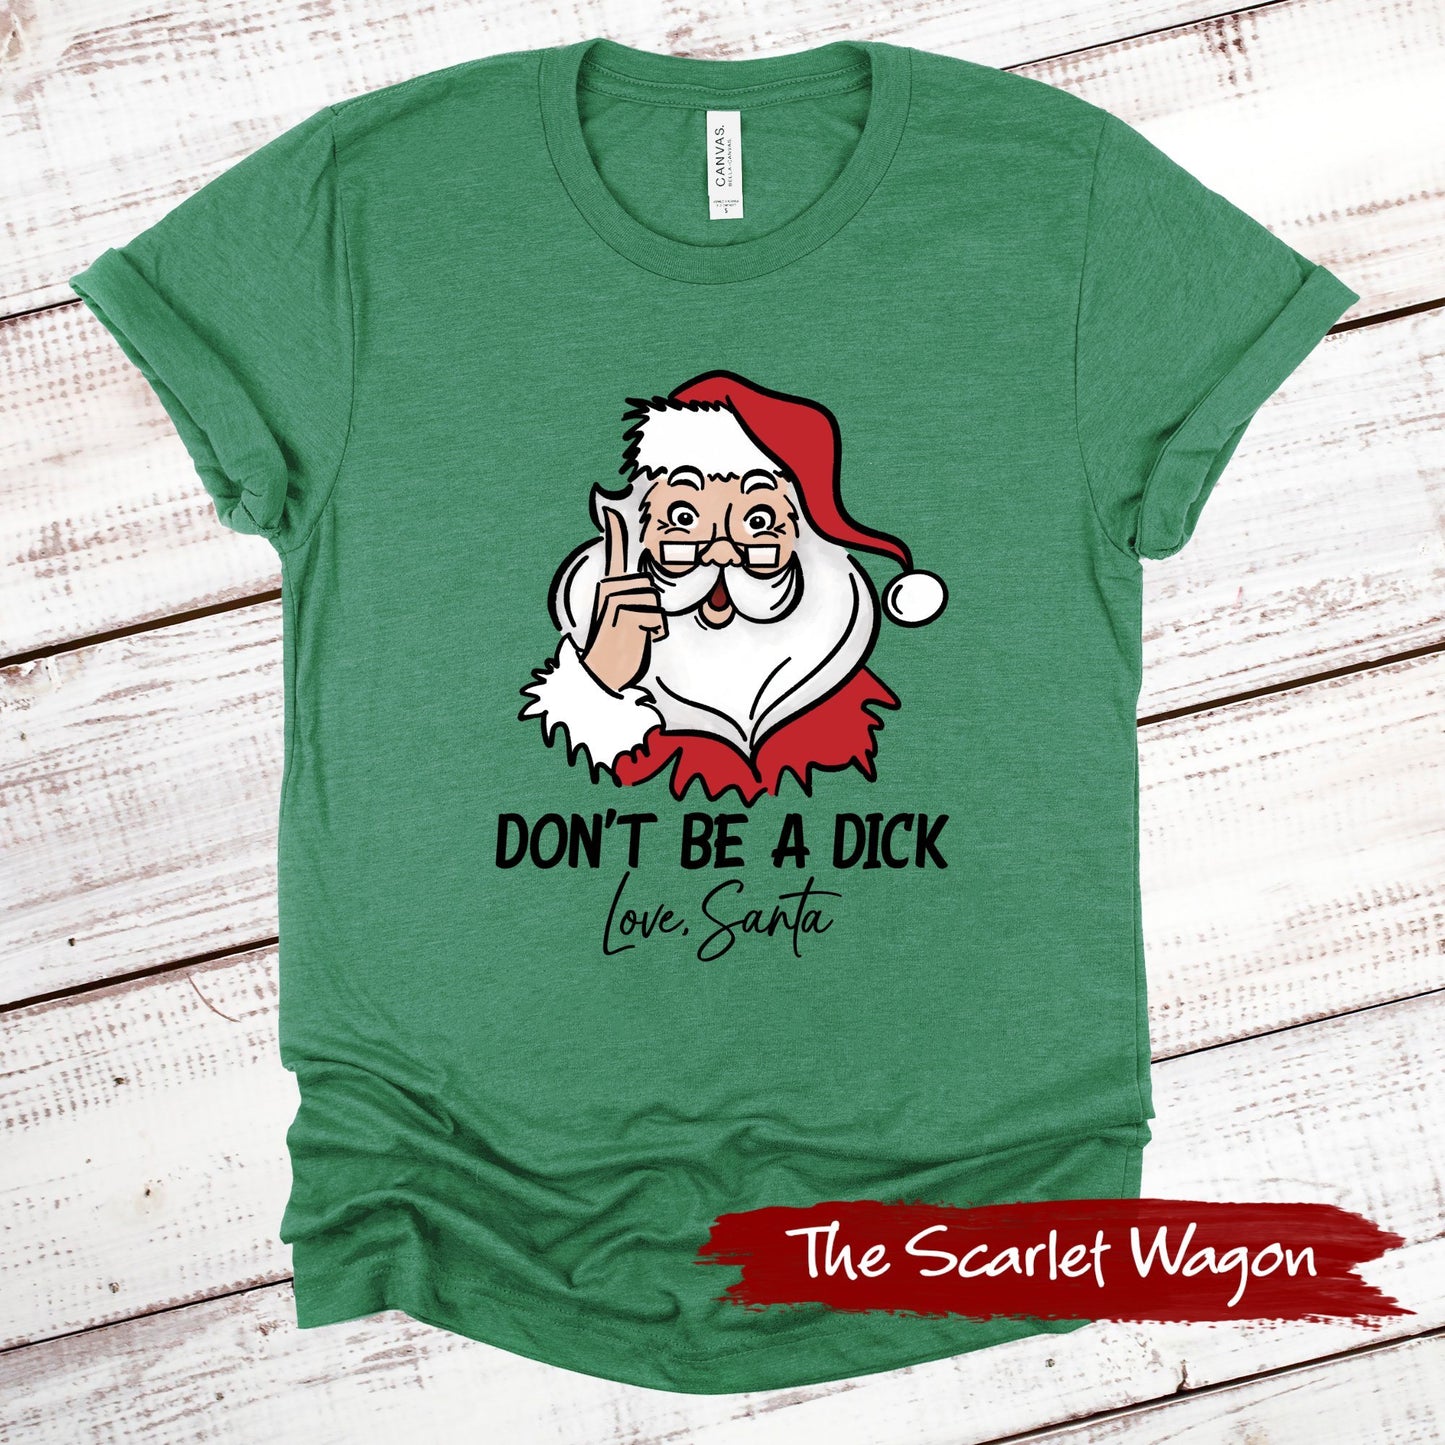 Don't Be a Dick - Love, Santa Christmas Shirt Scarlet Wagon Heather Green XS 